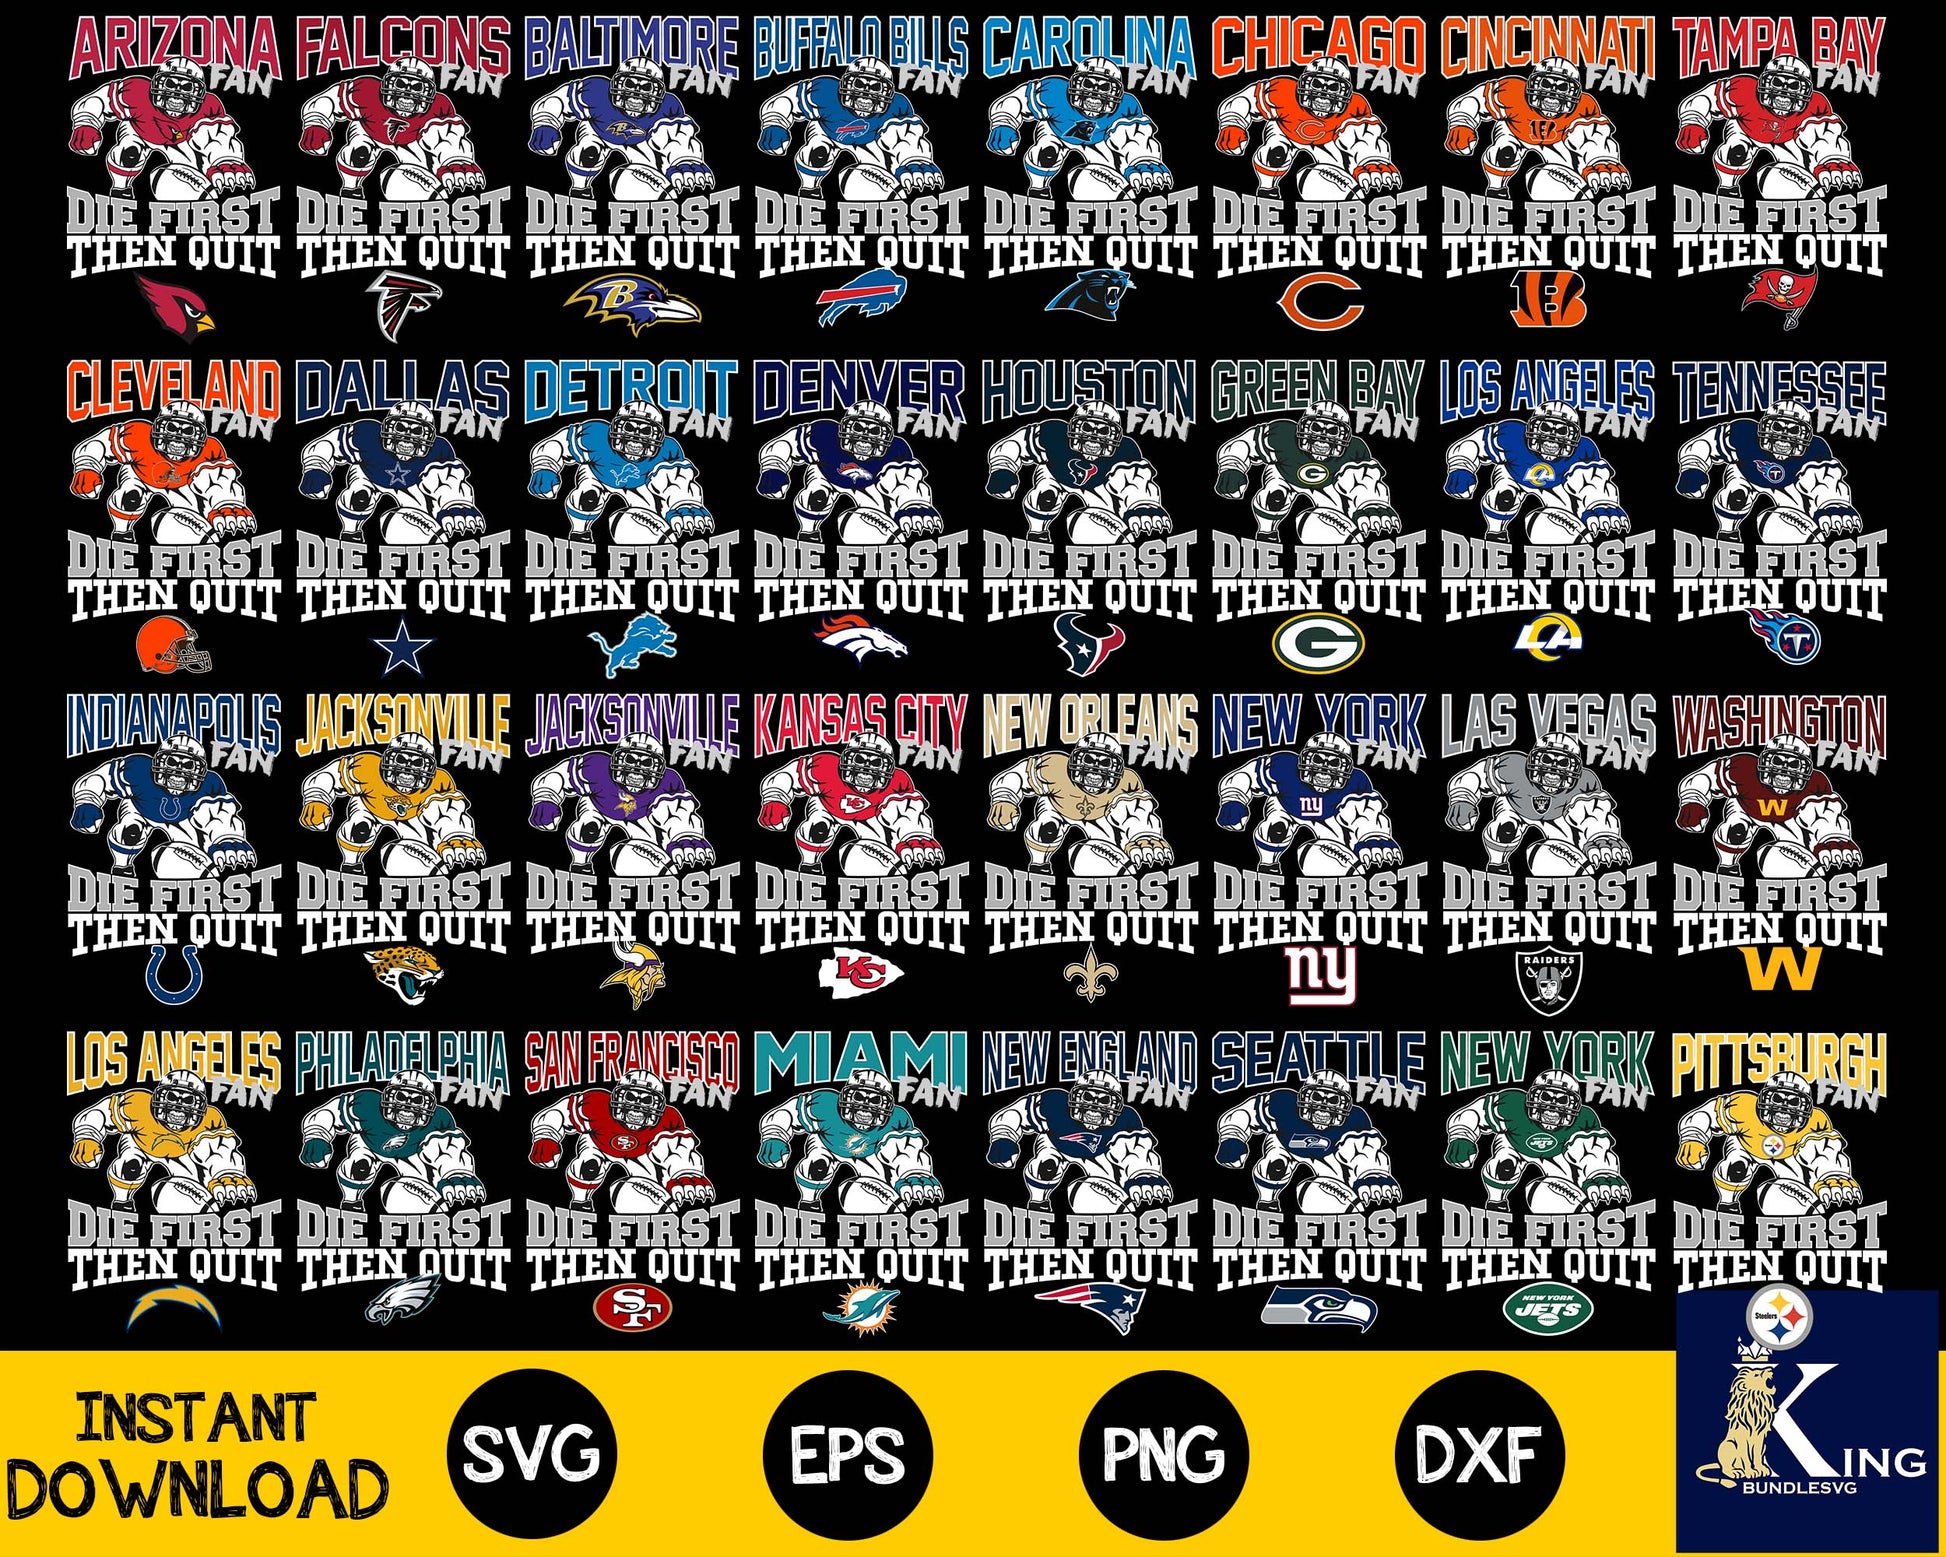 Los Angeles Rams SVG, NFL Football Team T-shirt SVG Design Cut Files Cricut  Digital Download SVG